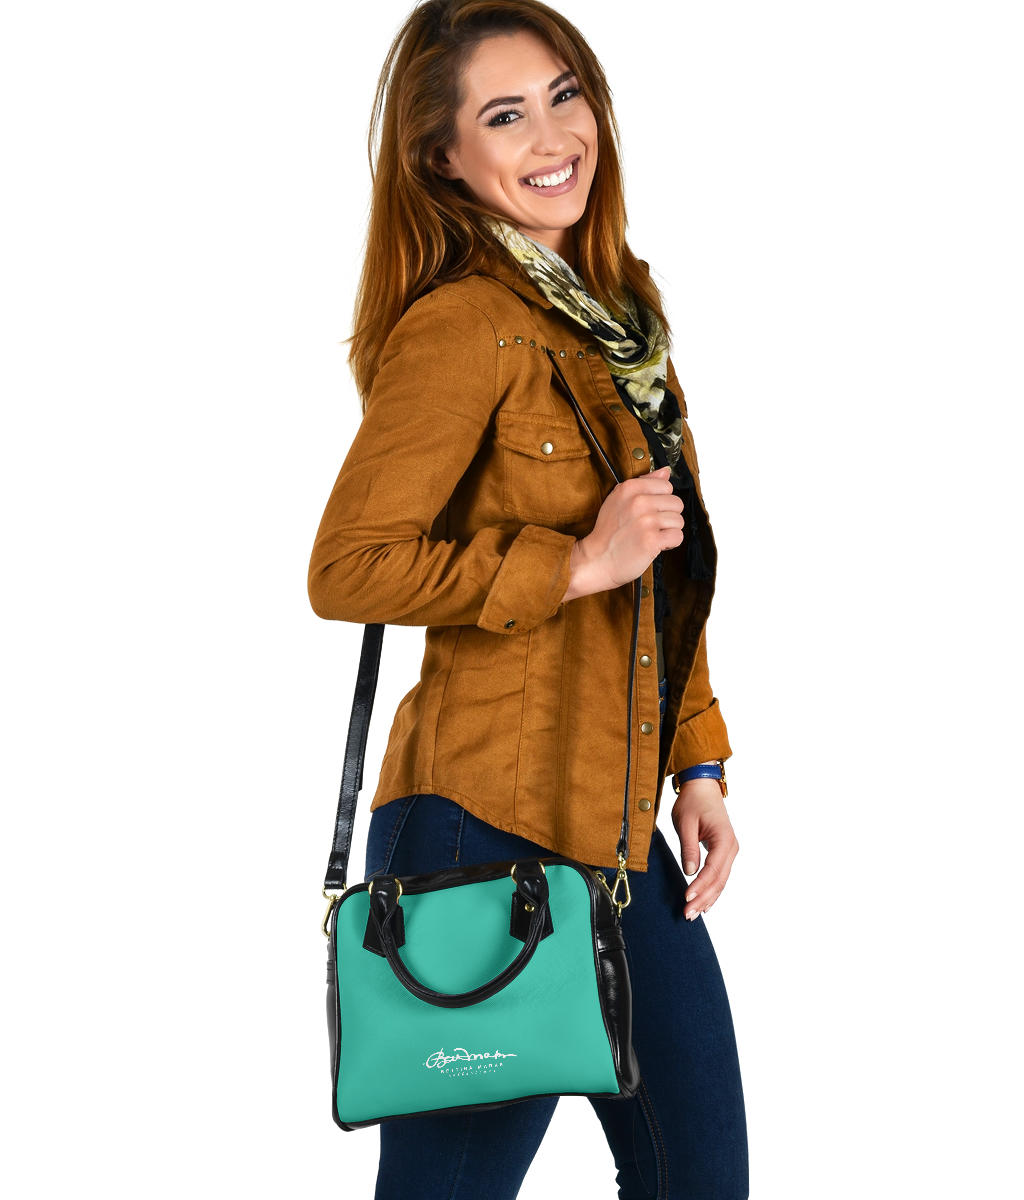 Neon Color Hand Bag w Shoulder Strap